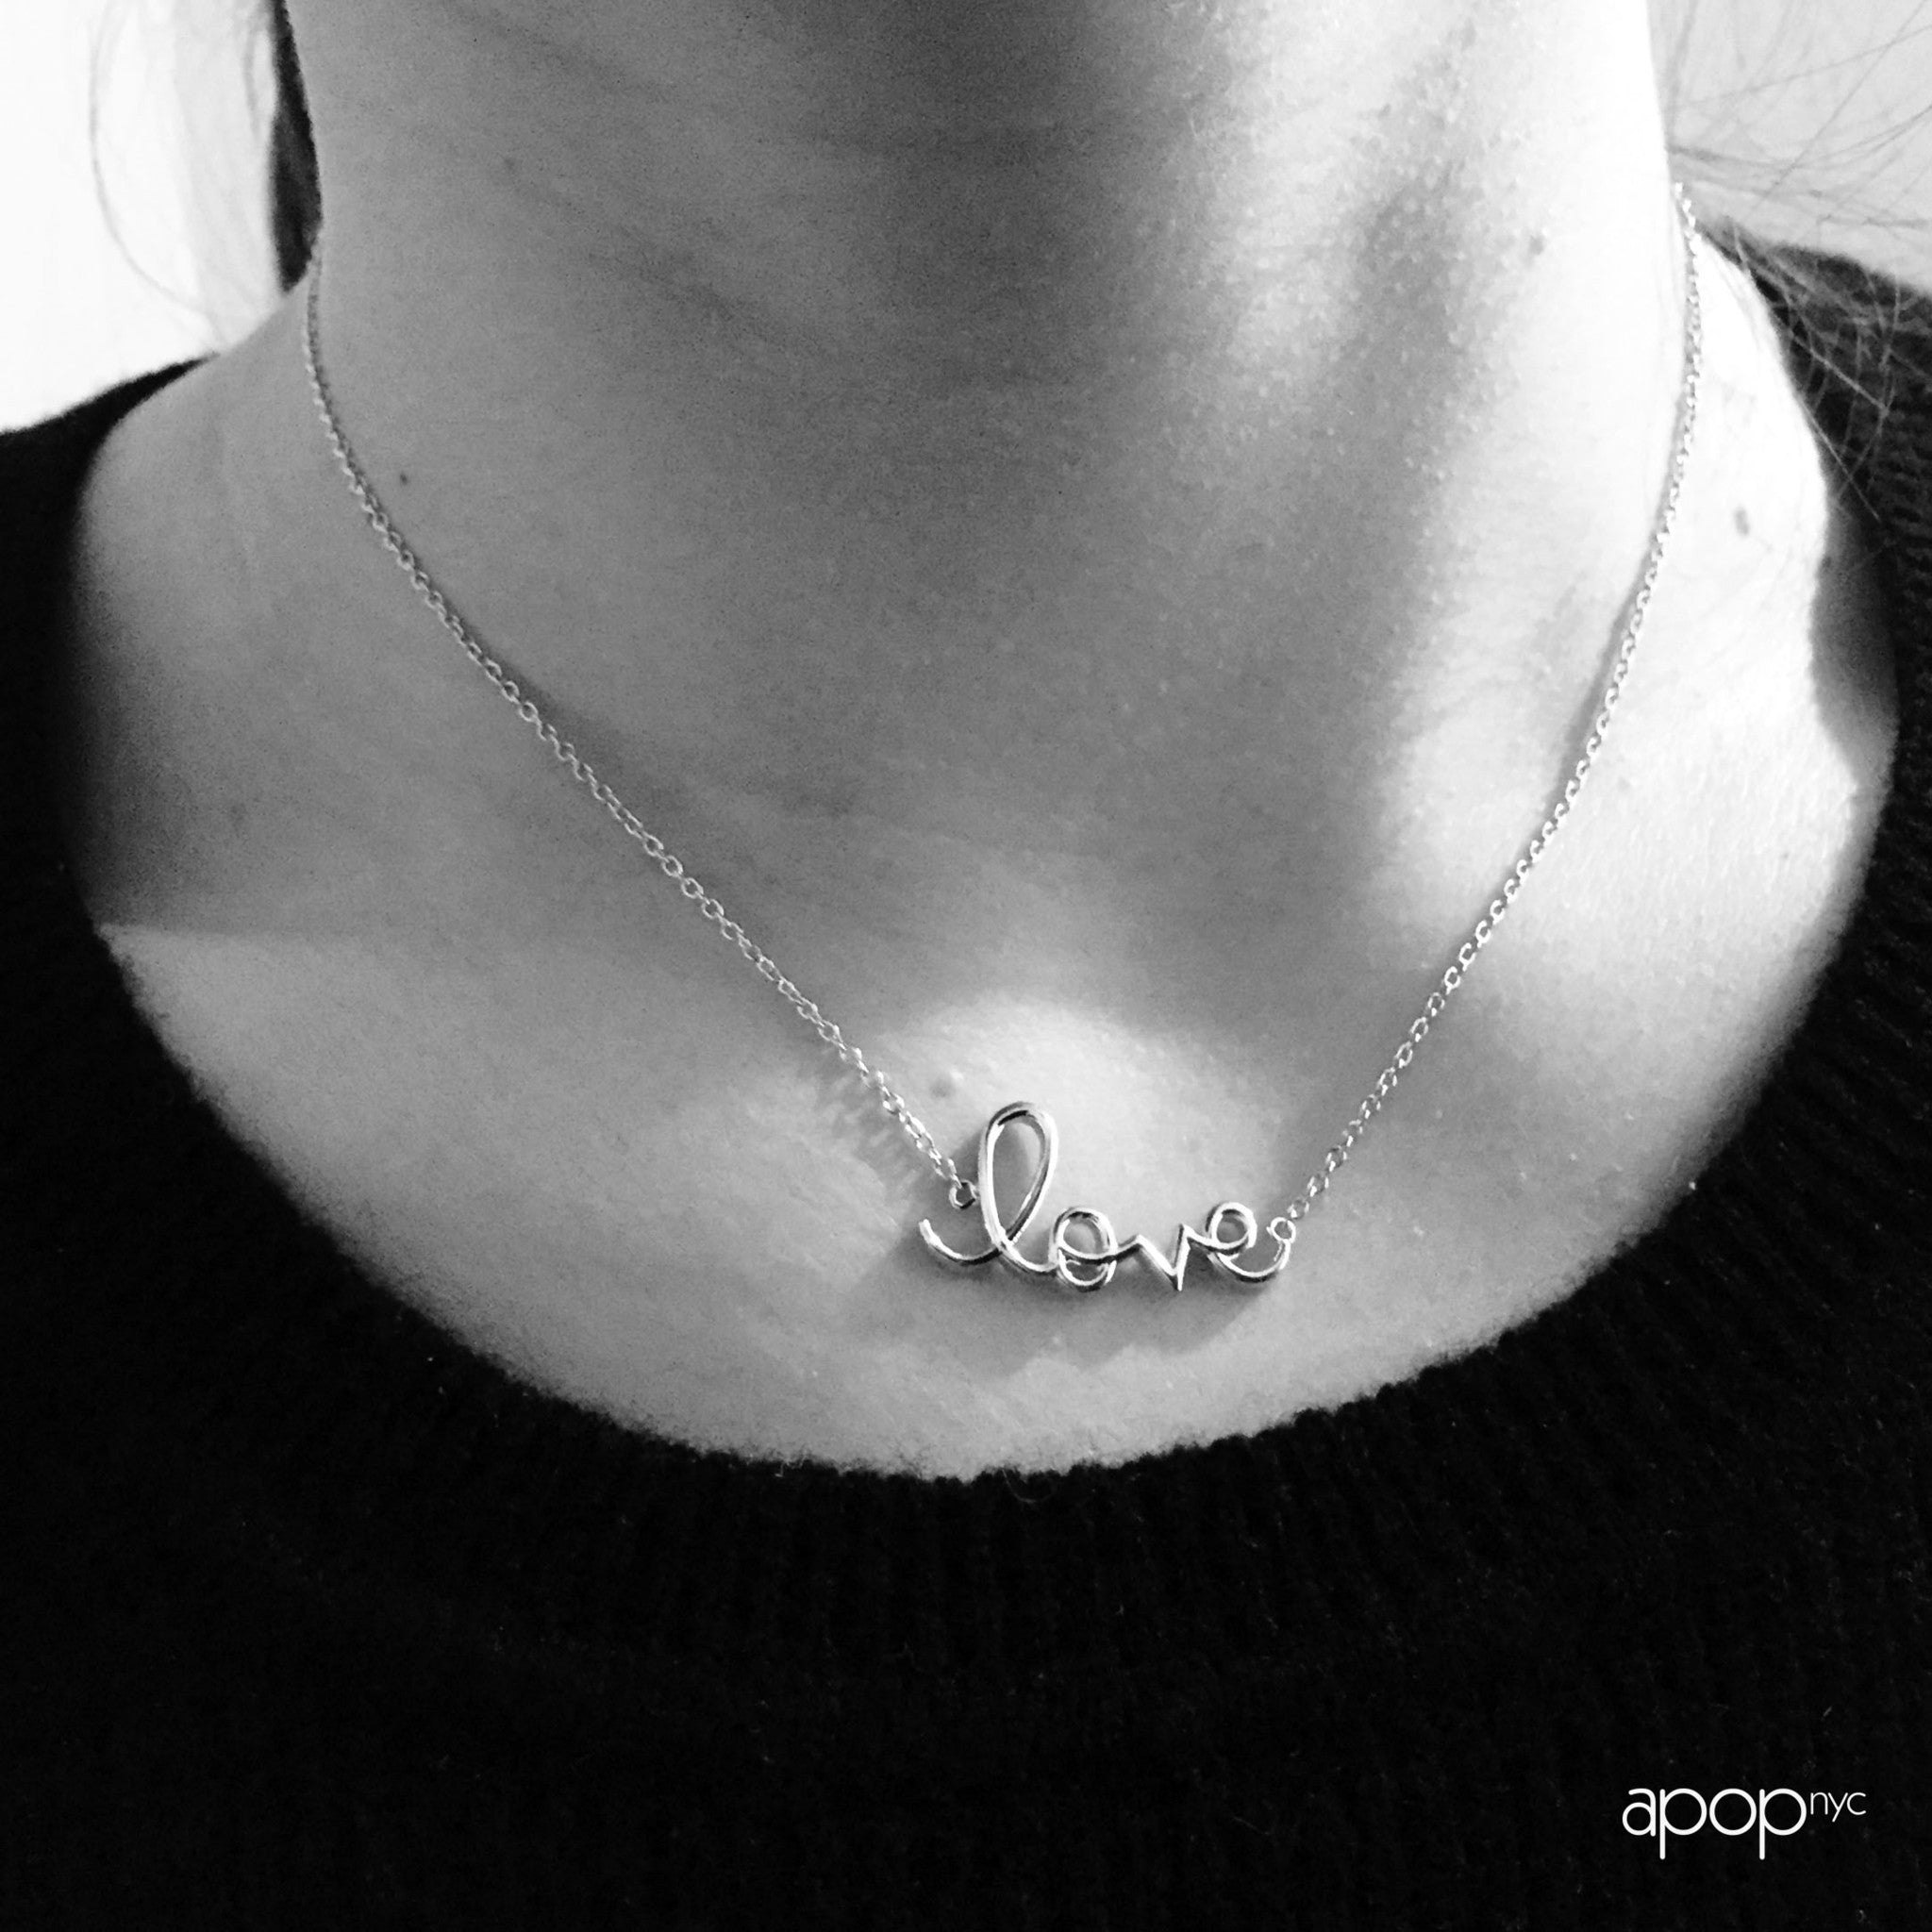 Gold-Dipped Cursive "Love" Pendant Necklace